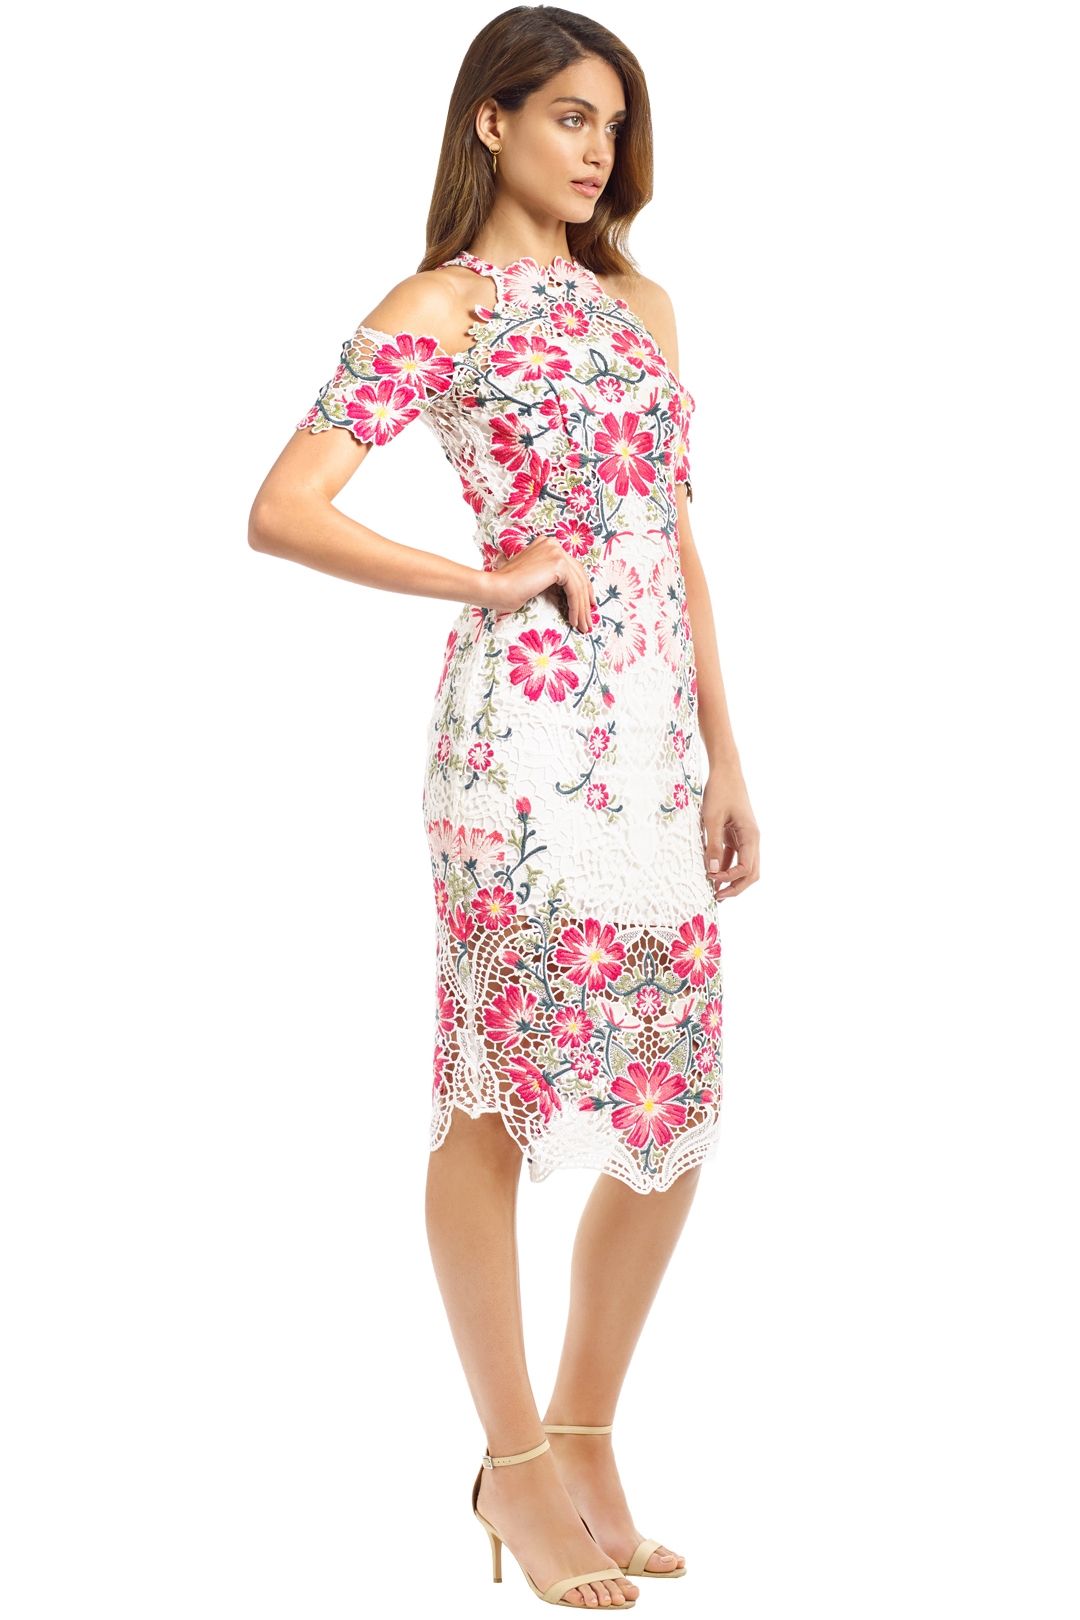 Thurley - Flower Bomb Lace Midi Dress - Pink Multi - Side